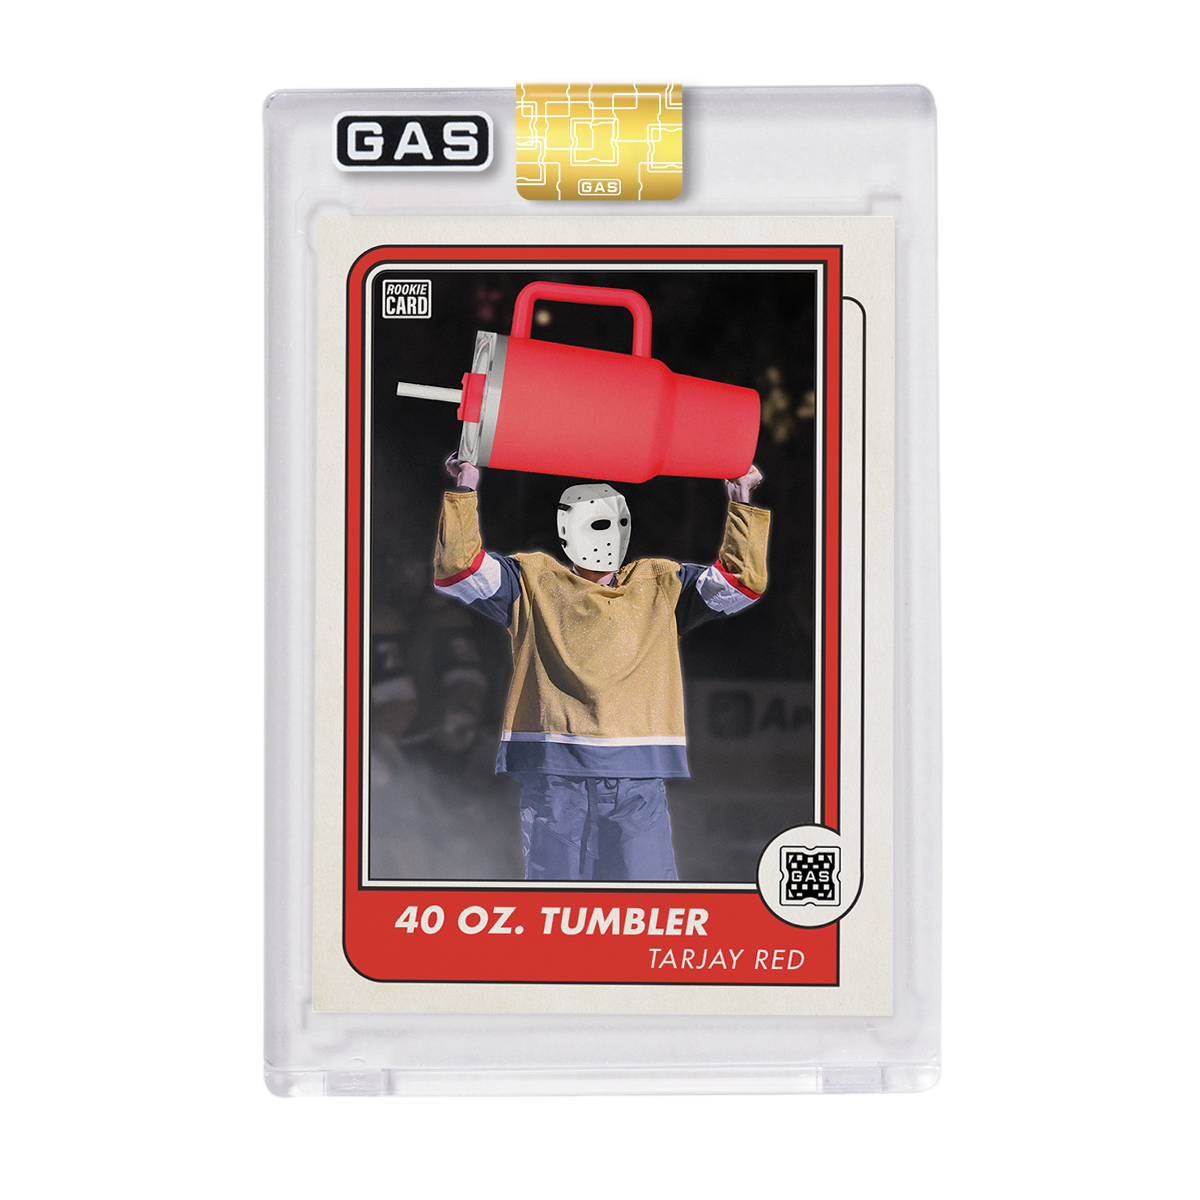 GAS 40 Oz. Tumbler Rookie Short Print Tarjay Red Card